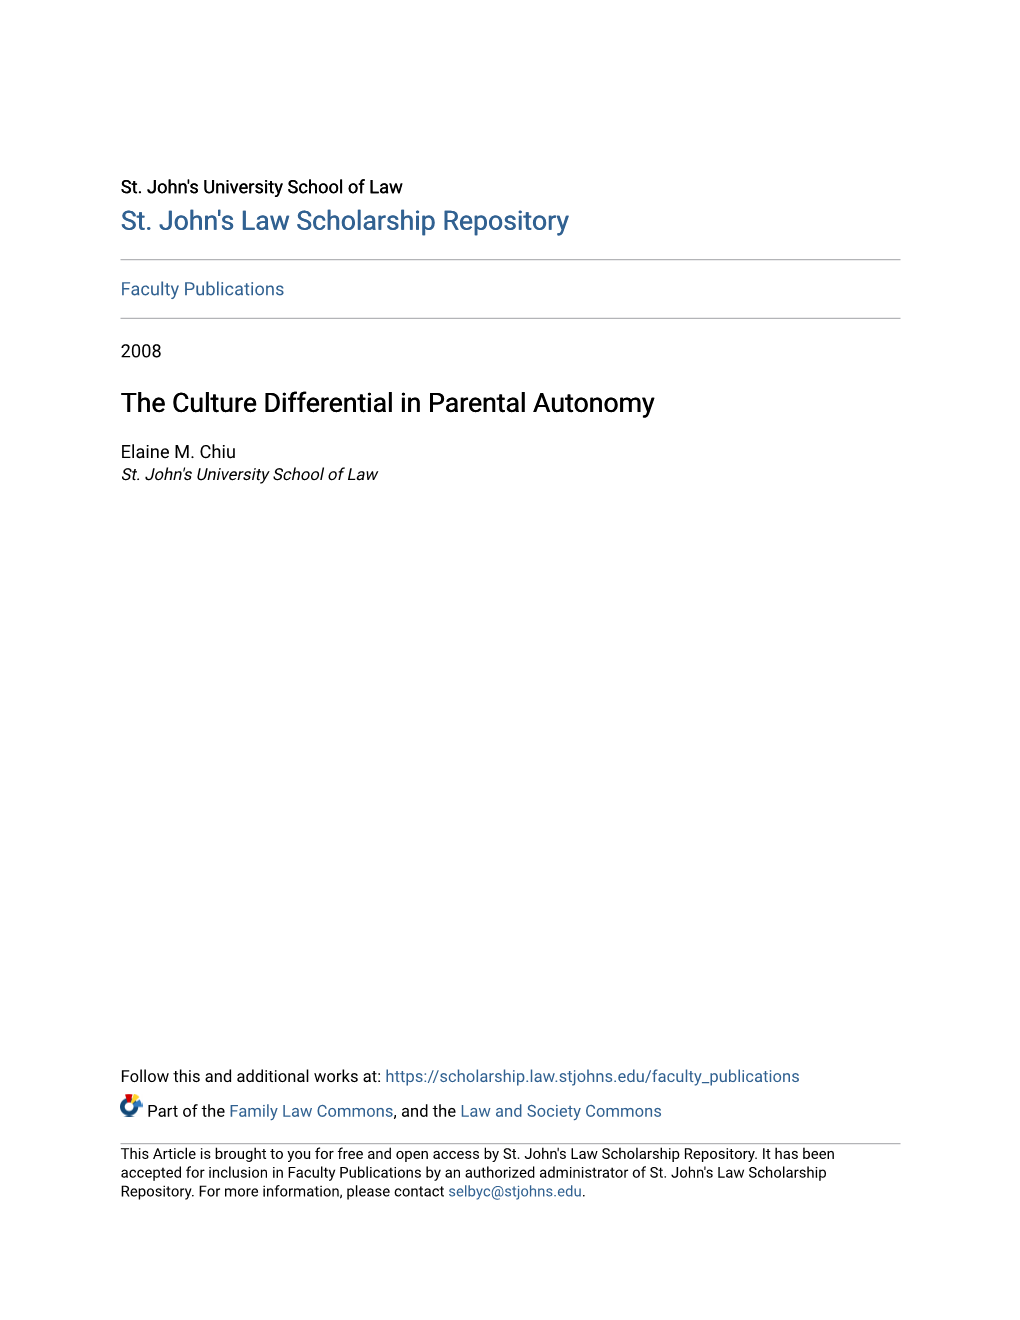 The Culture Differential in Parental Autonomy